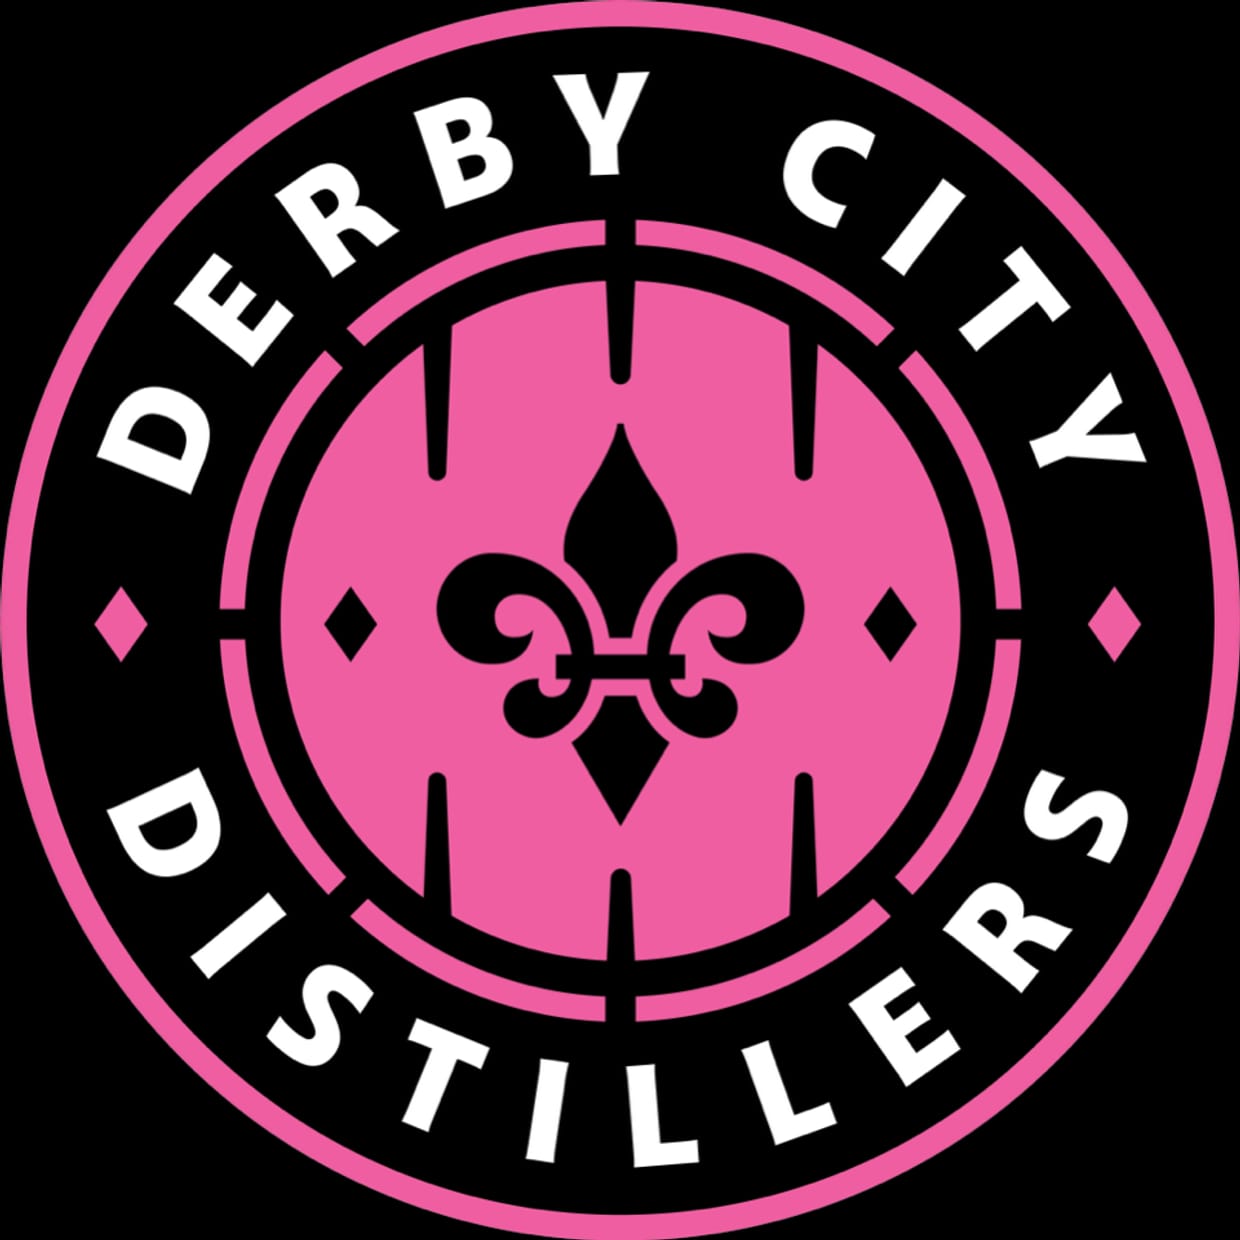 Derby City Distillers v. Newfoundland Rogues